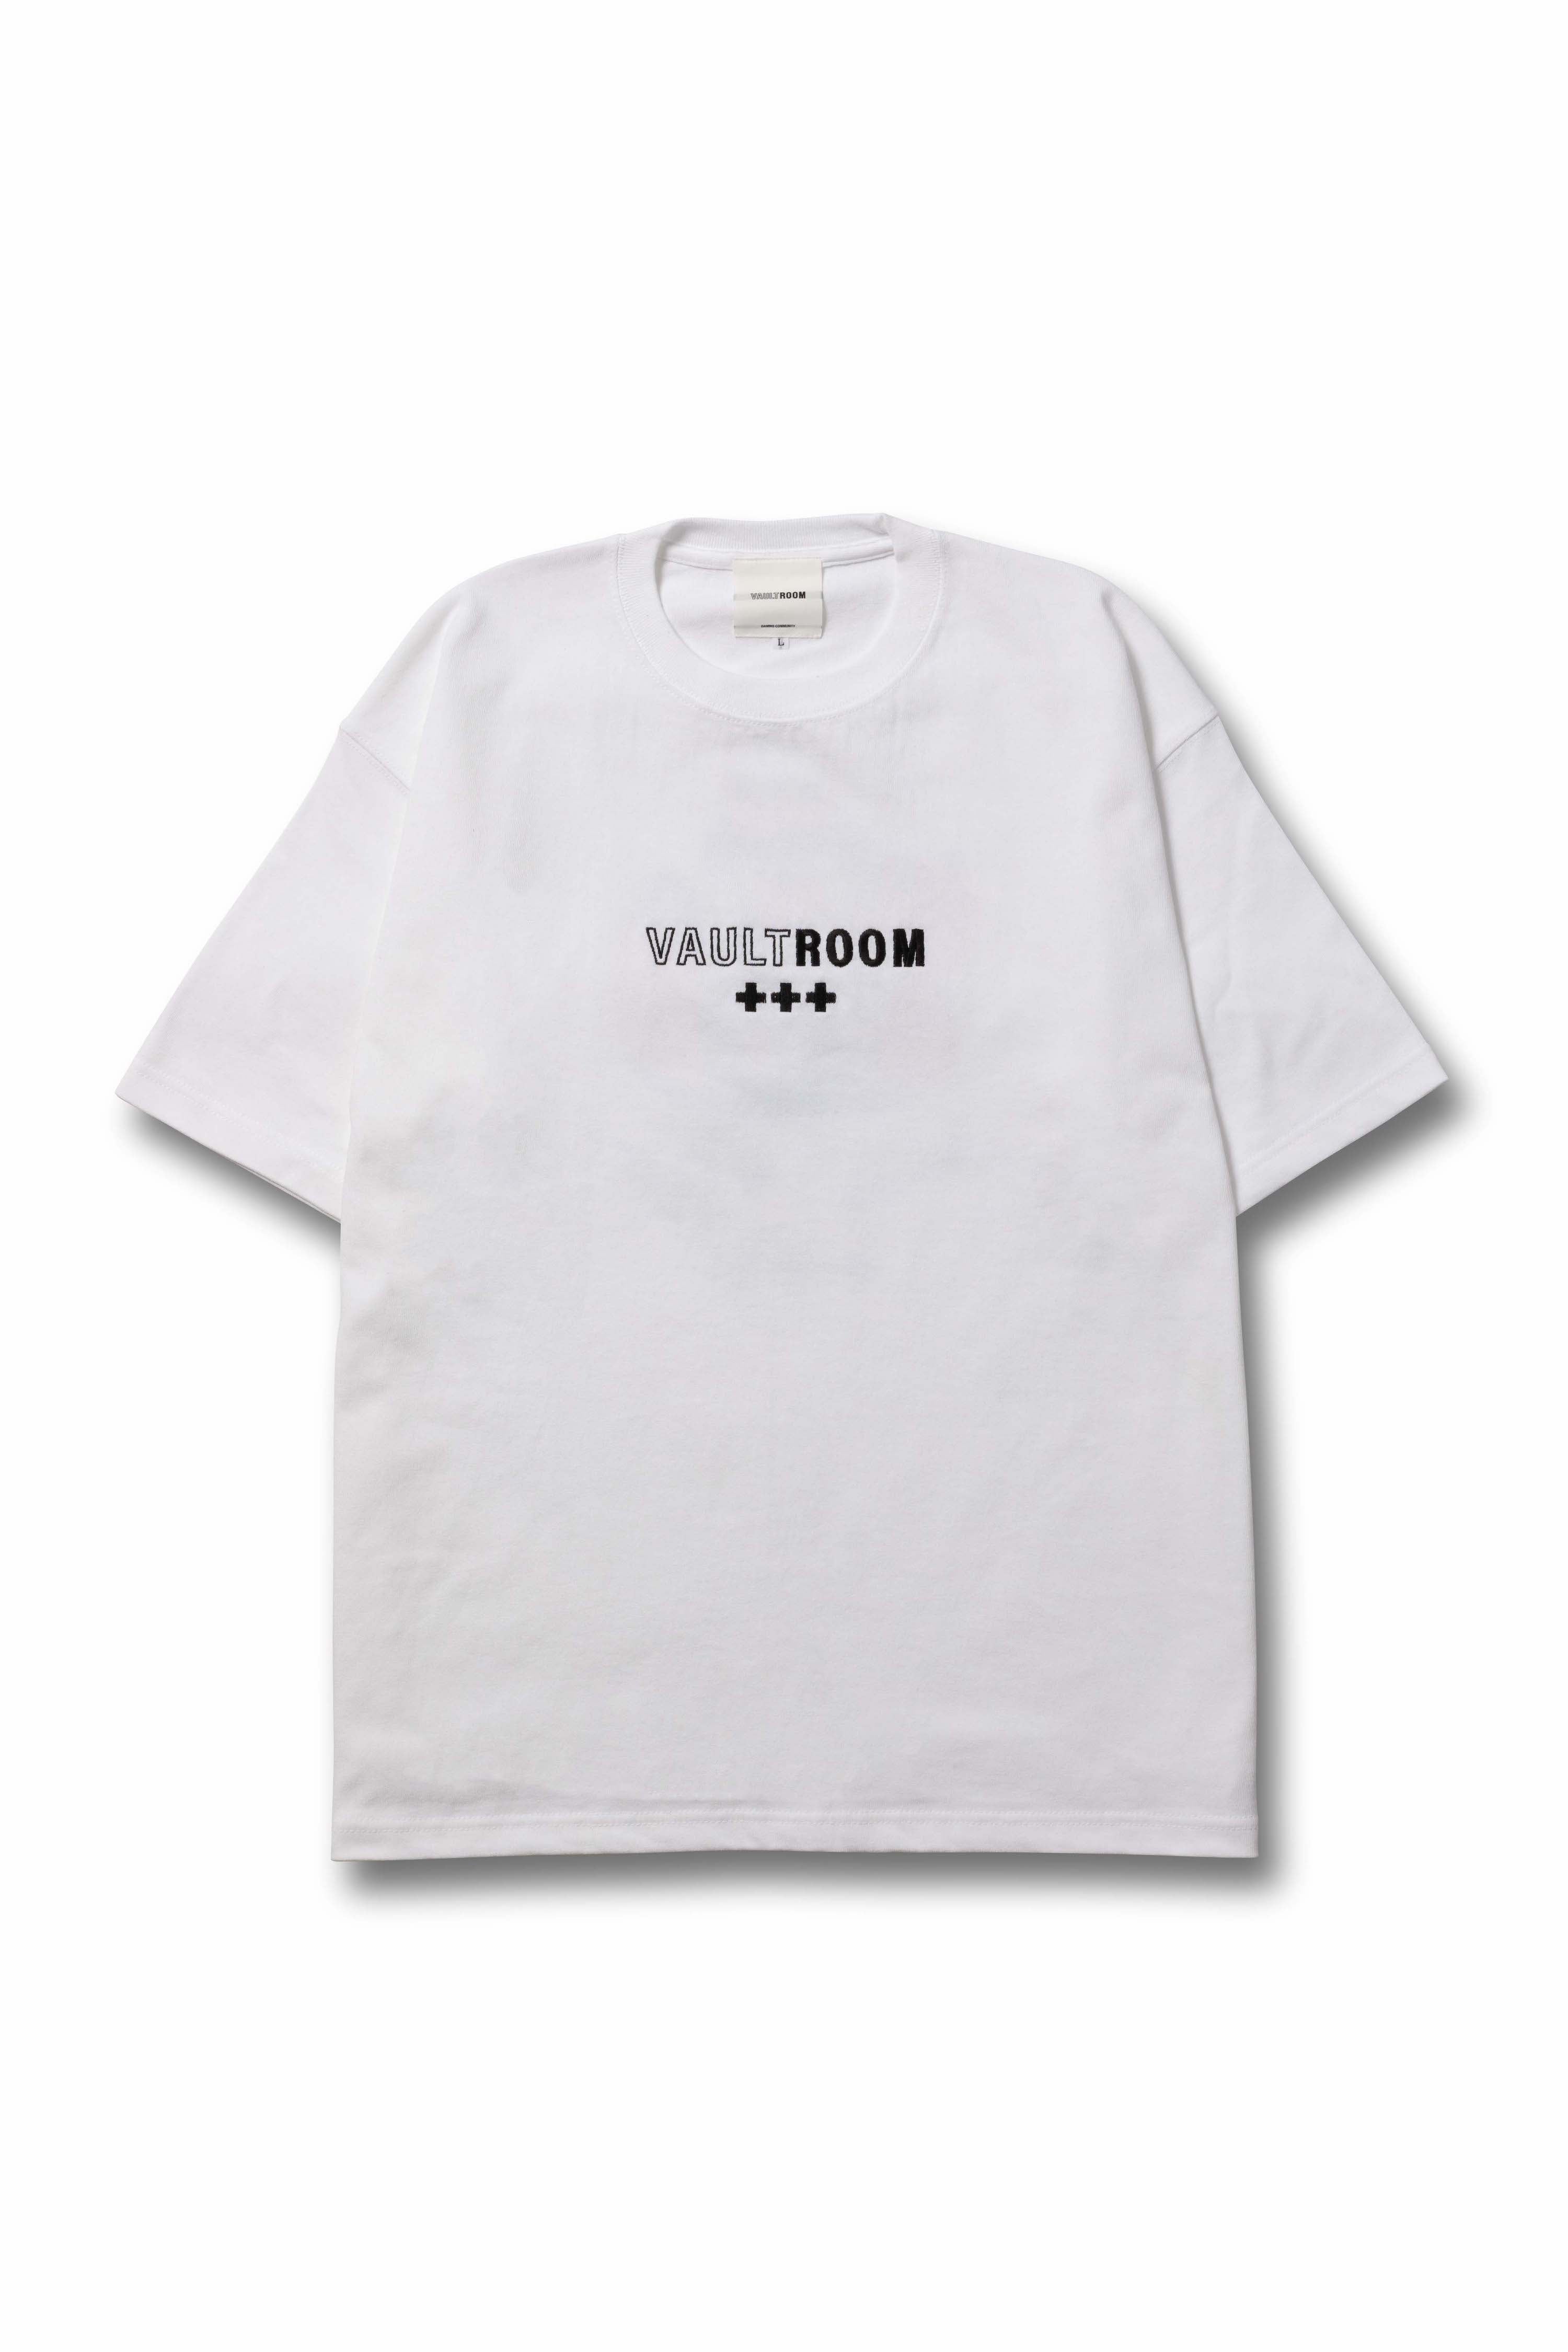 vaultroom DO NOT JOIN TEE / WHT - トップス